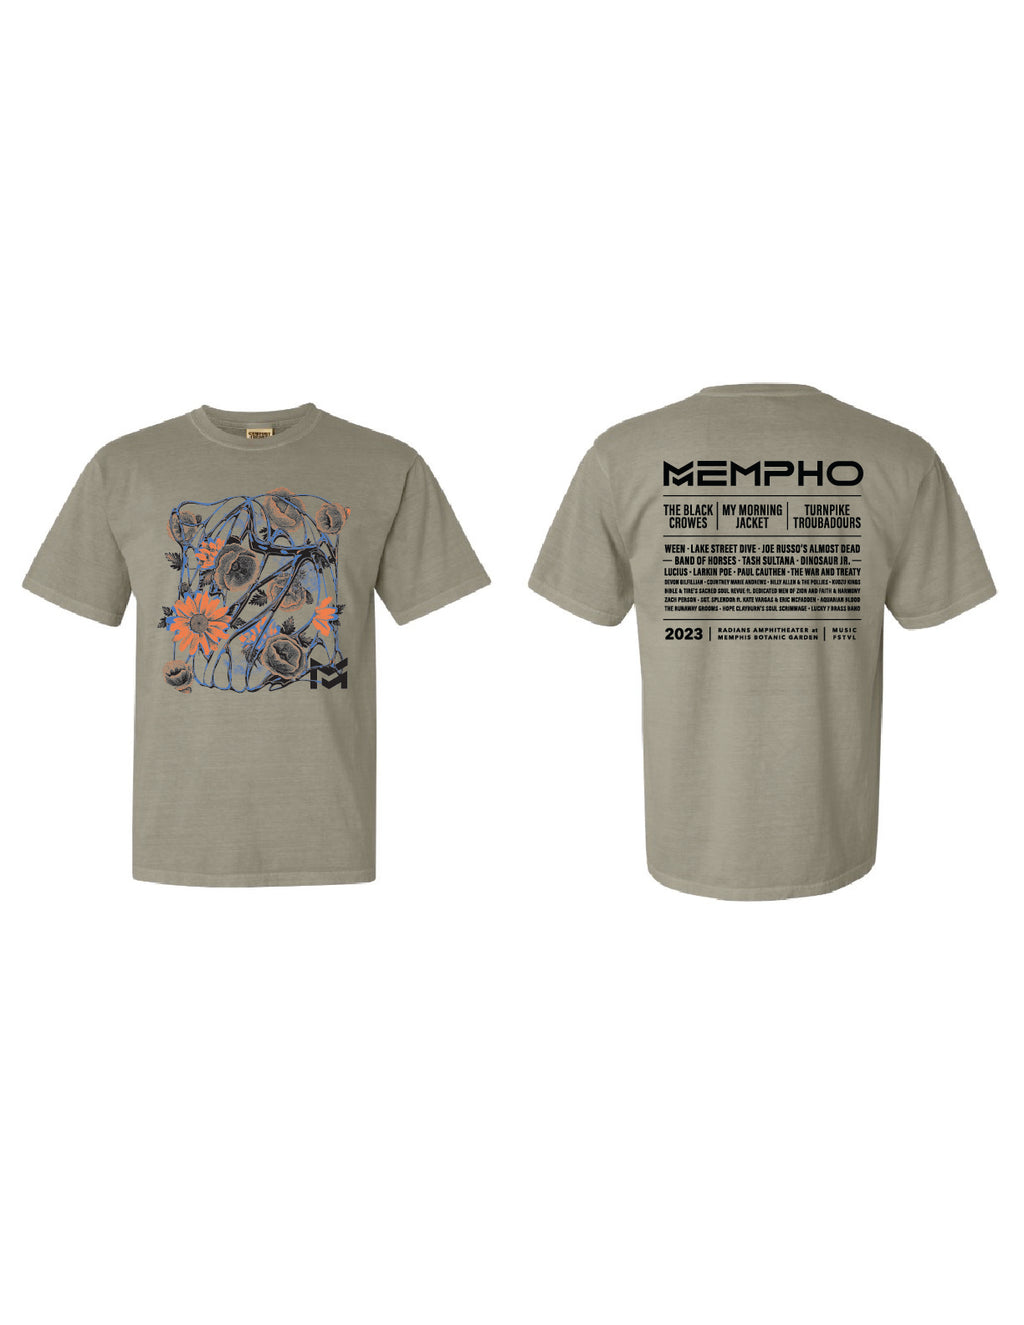 Mempho Fest 2023 Lineup T-Shirt